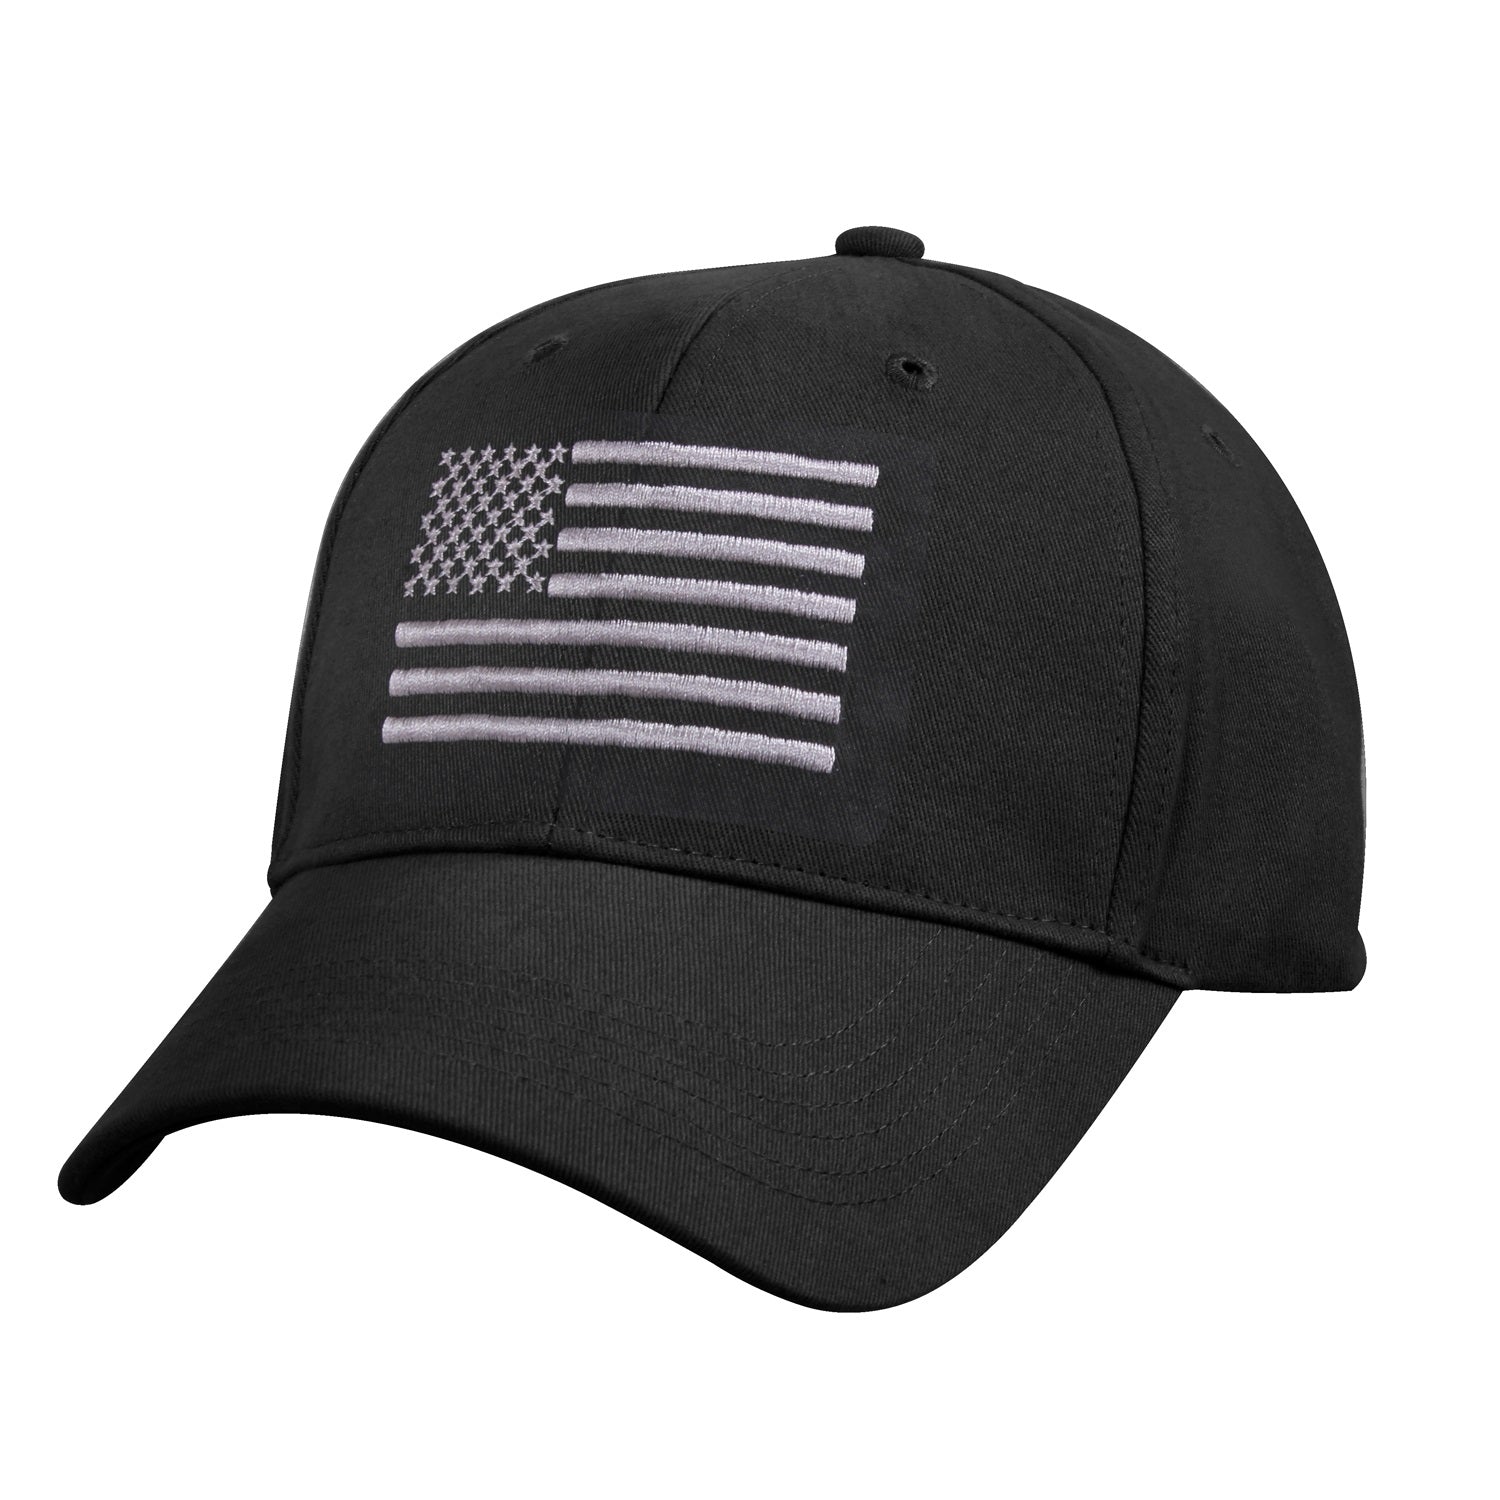 Rothco U.S. Flag Low Profile Cap Black / Silver